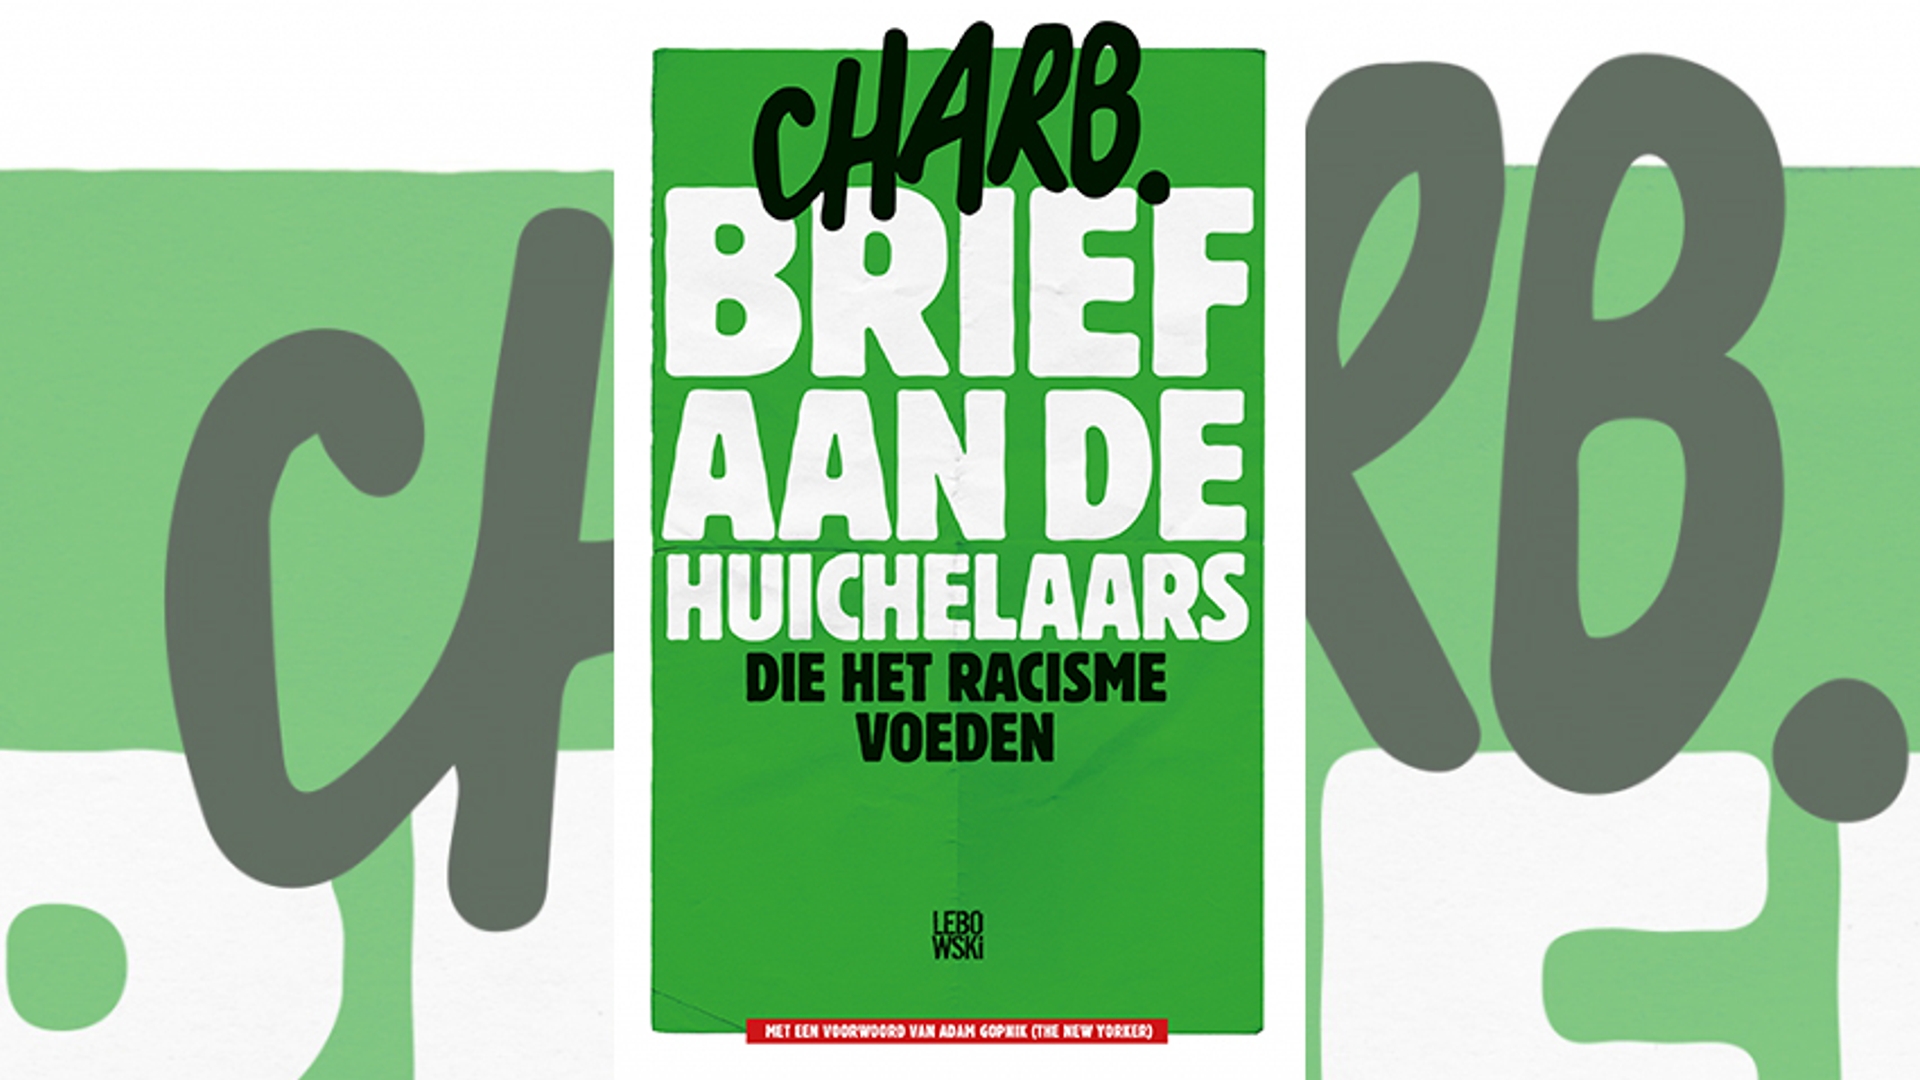 Boek Charb